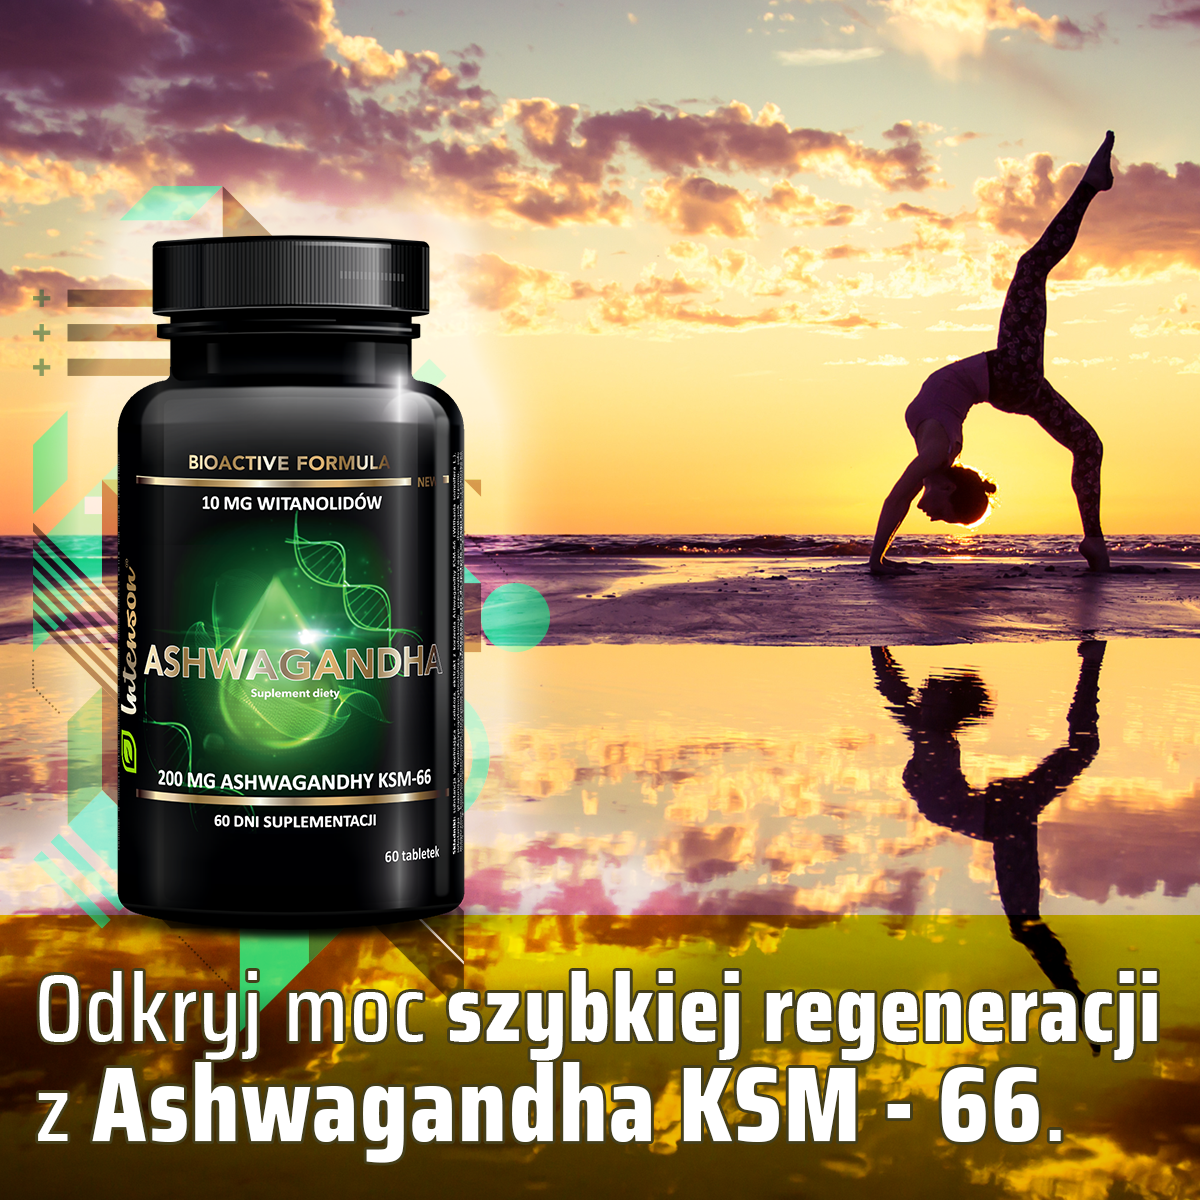 Ashwagandha 200mg ekstrakt standaryzowany KSM-66 - 60 tabletek - Intenson.pl